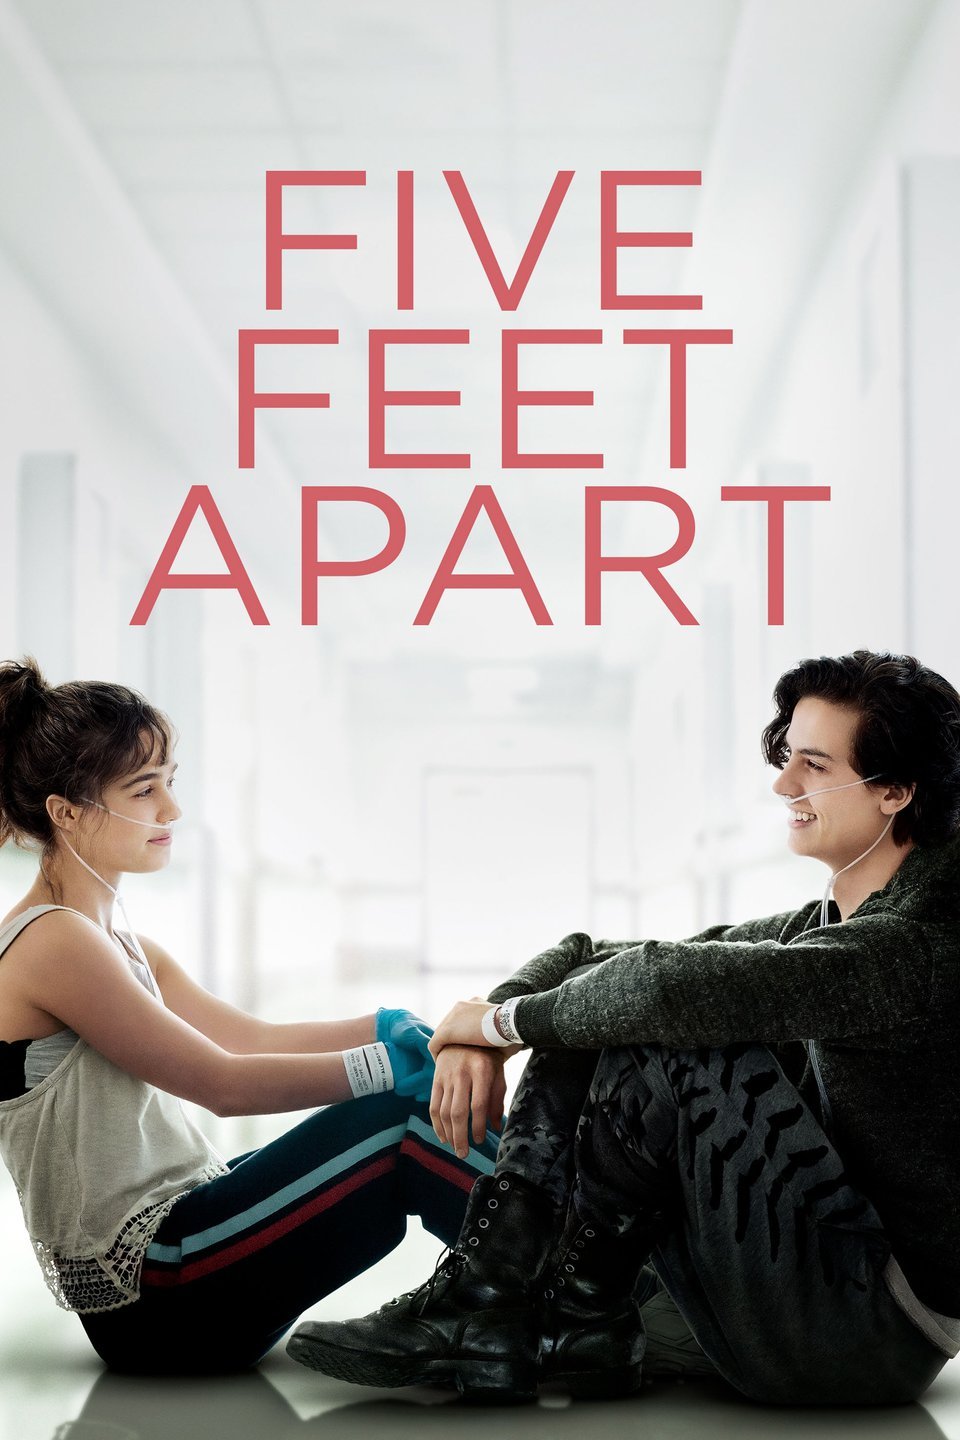 [MINI Super-HQ] Five Feet Apart (2019) ขออีกฟุตให้หัวใจเราใกล้กัน [1080p] [พากย์ไทย 5.1 + เสียงอังกฤษ DTS] [บรรยายไทย + อังกฤษ] [เสียงไทย + ซับไทย] [OPENLOAD]